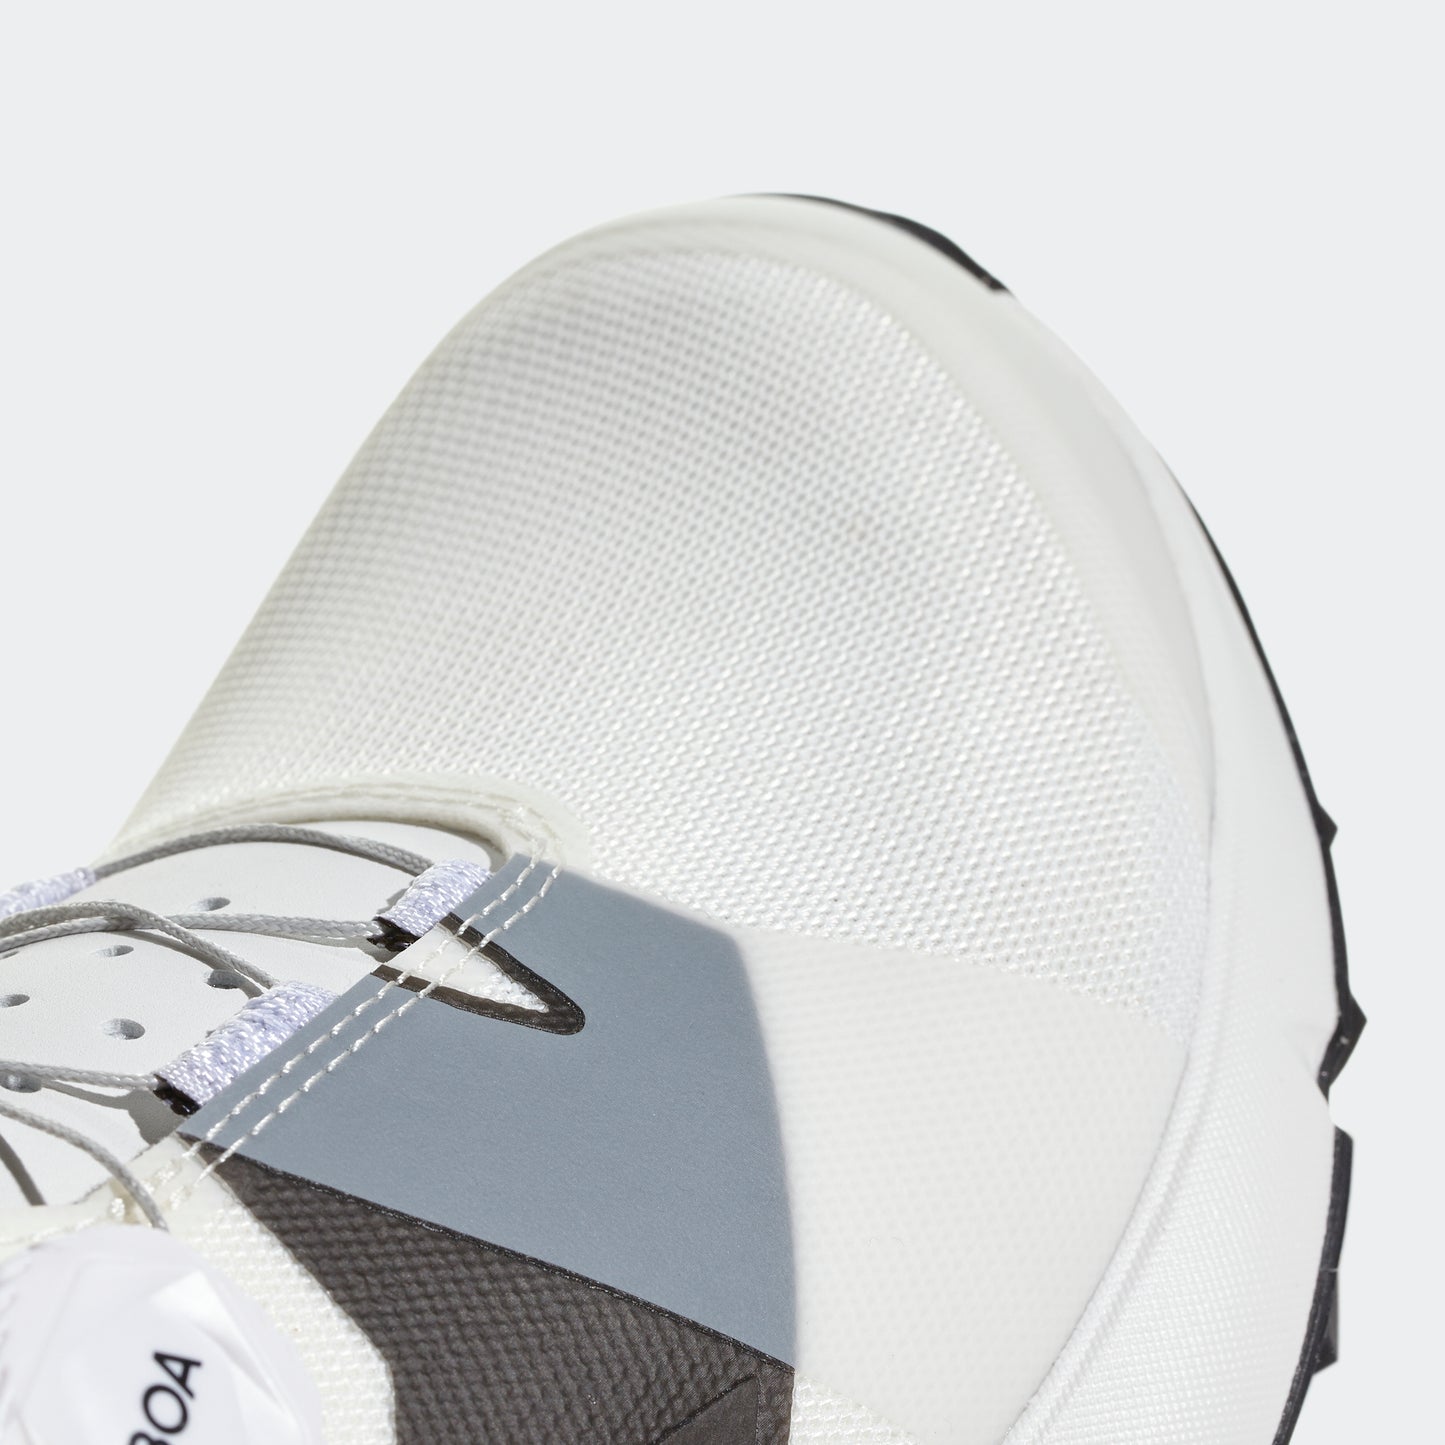 adidas TERREX TWO BOA Trail Shoes - Non-Dyed | Men's